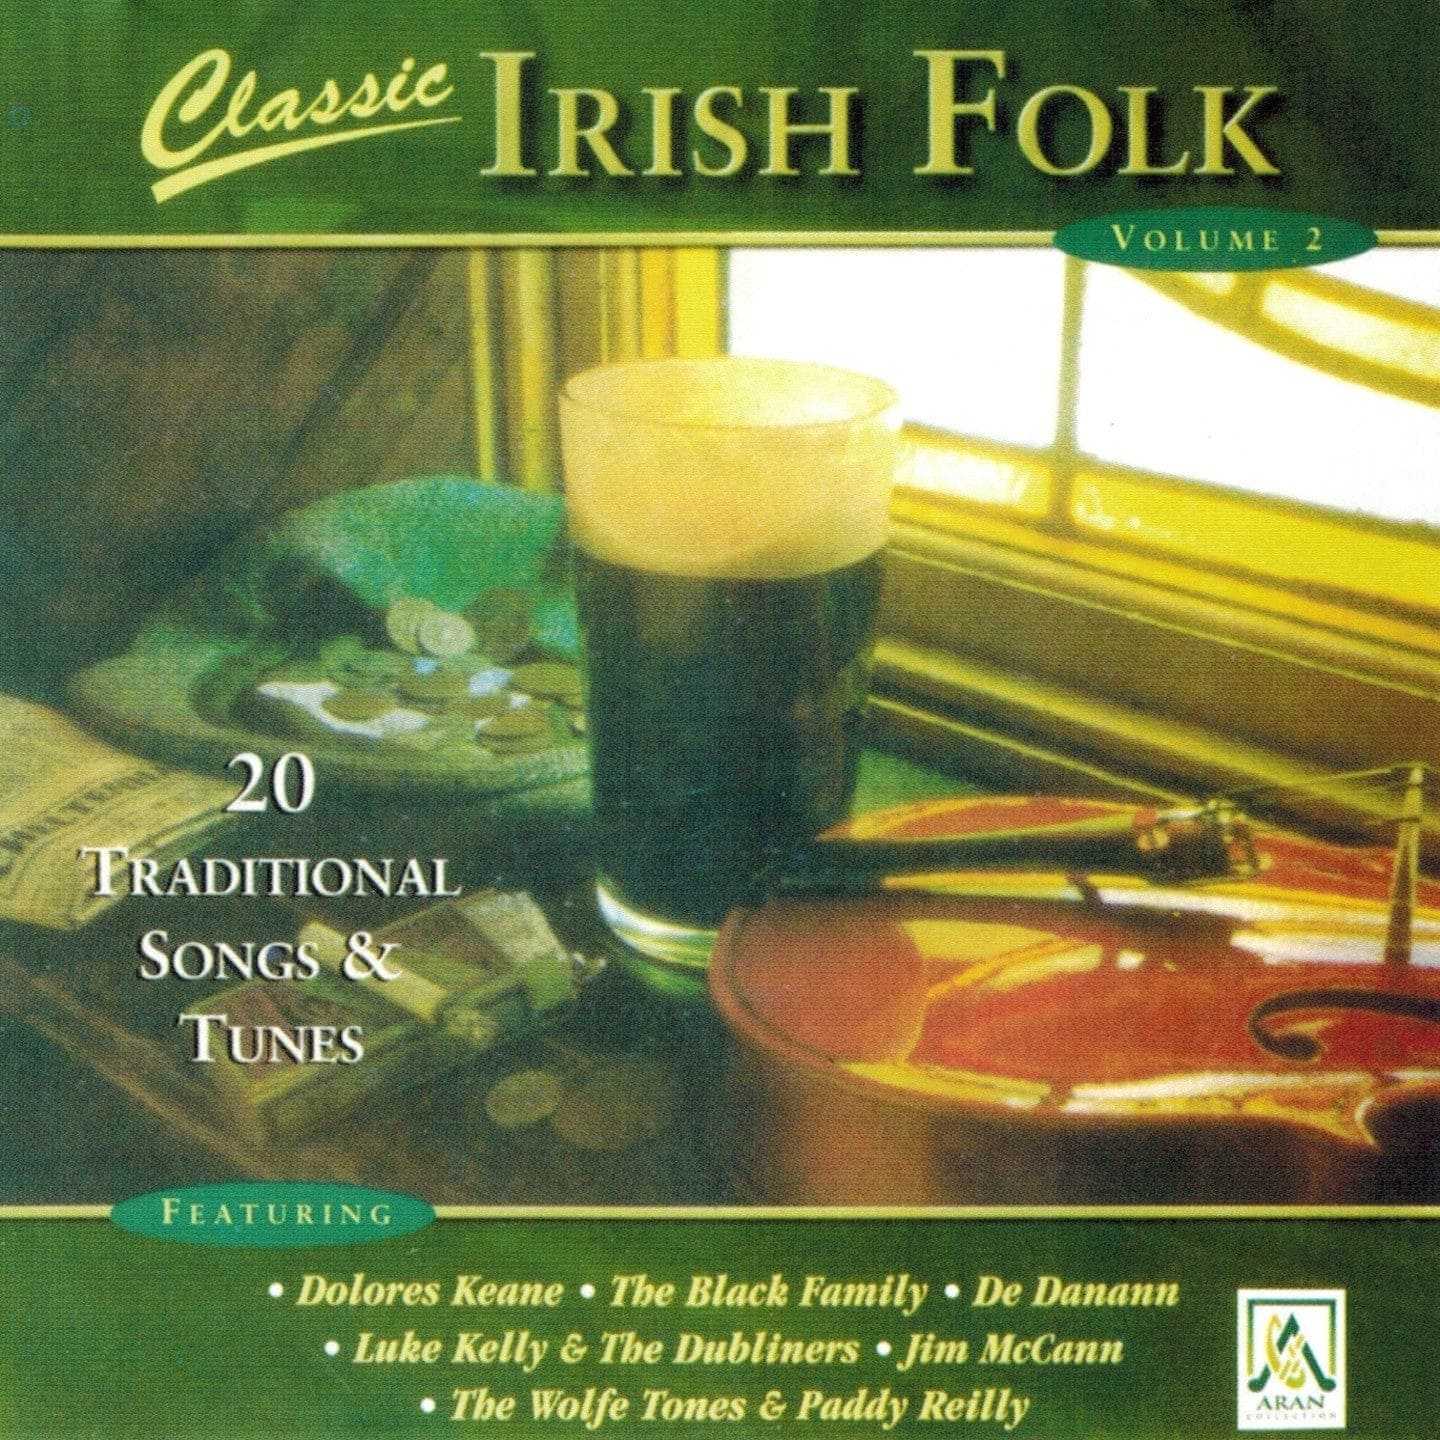 Classic Irish Folk (Volume 2) - Various Artists [CD]